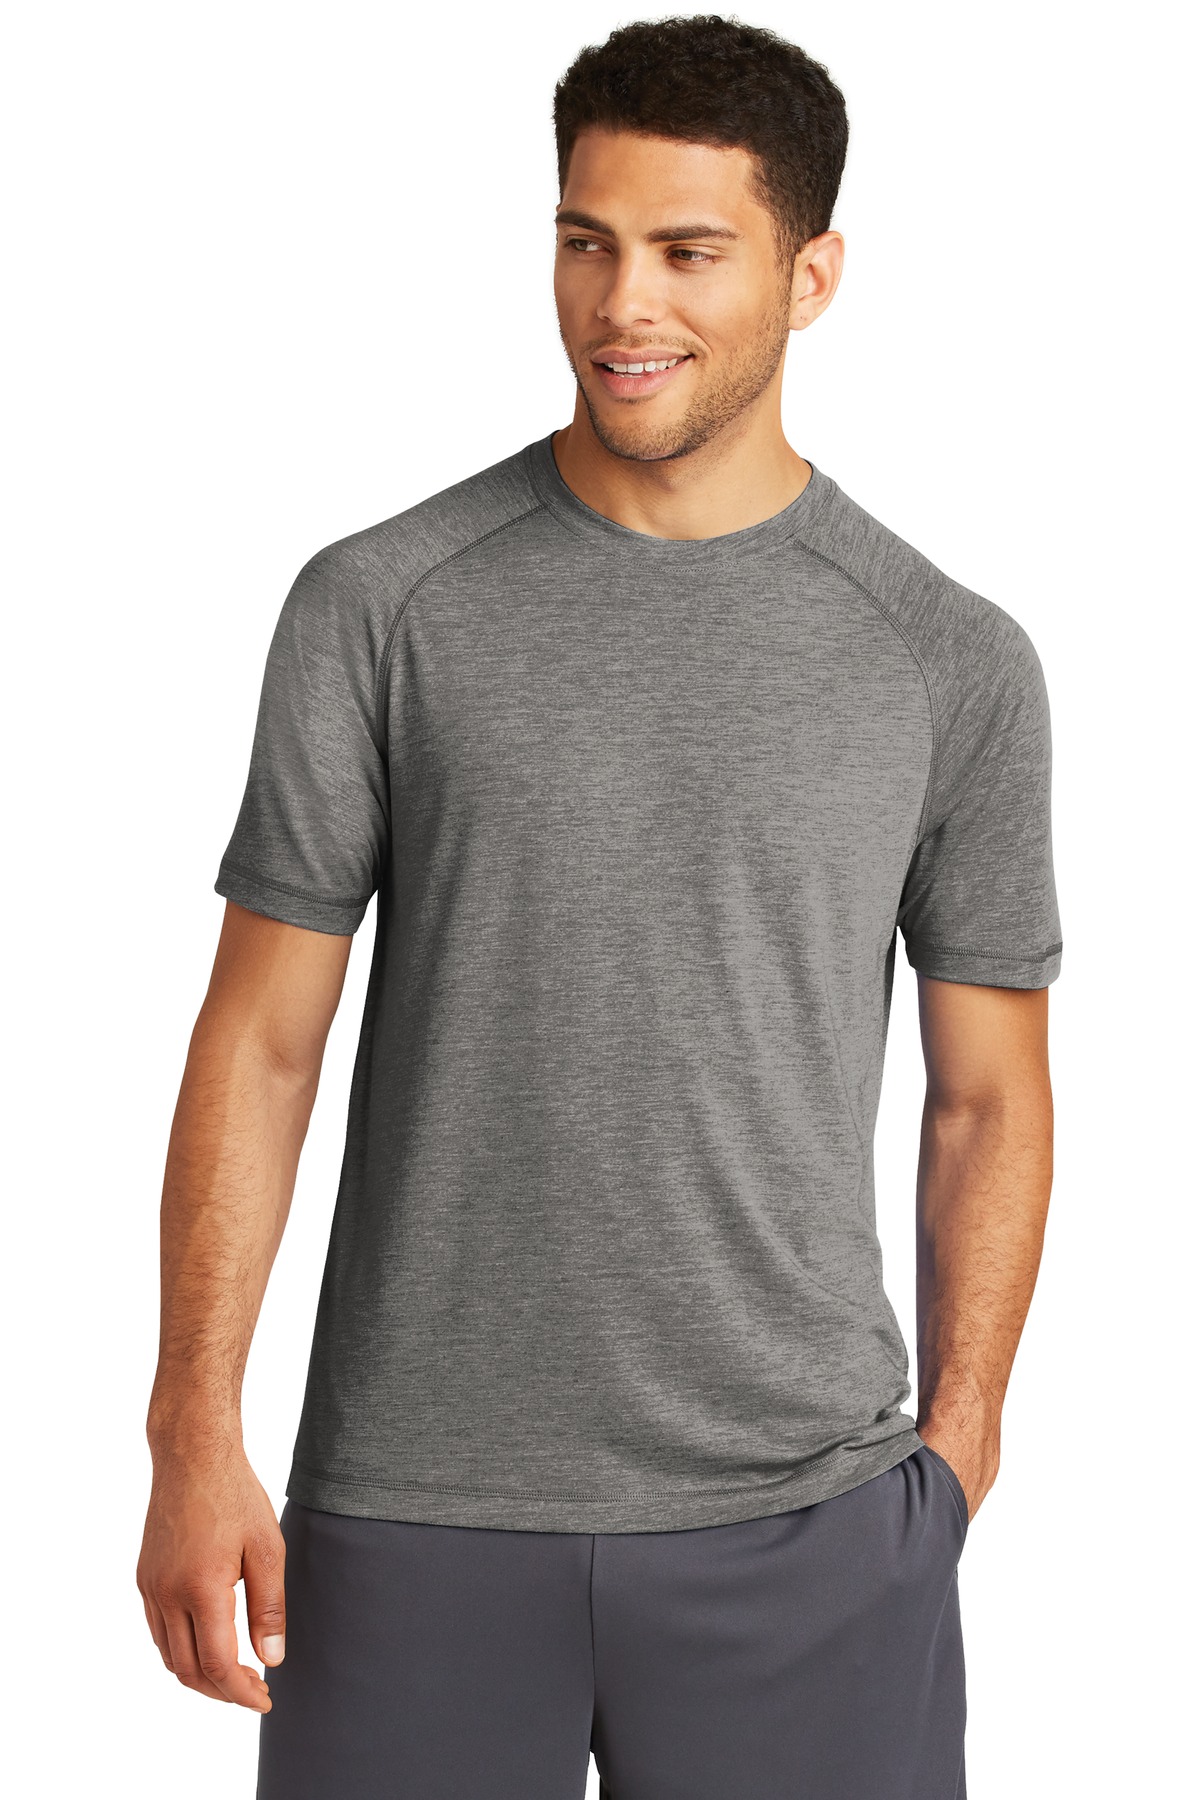 Sport-Tek Hospitality T-Shirts ® PosiCharge ® Tri-Blend Wicking Raglan Tee.-Sport-Tek